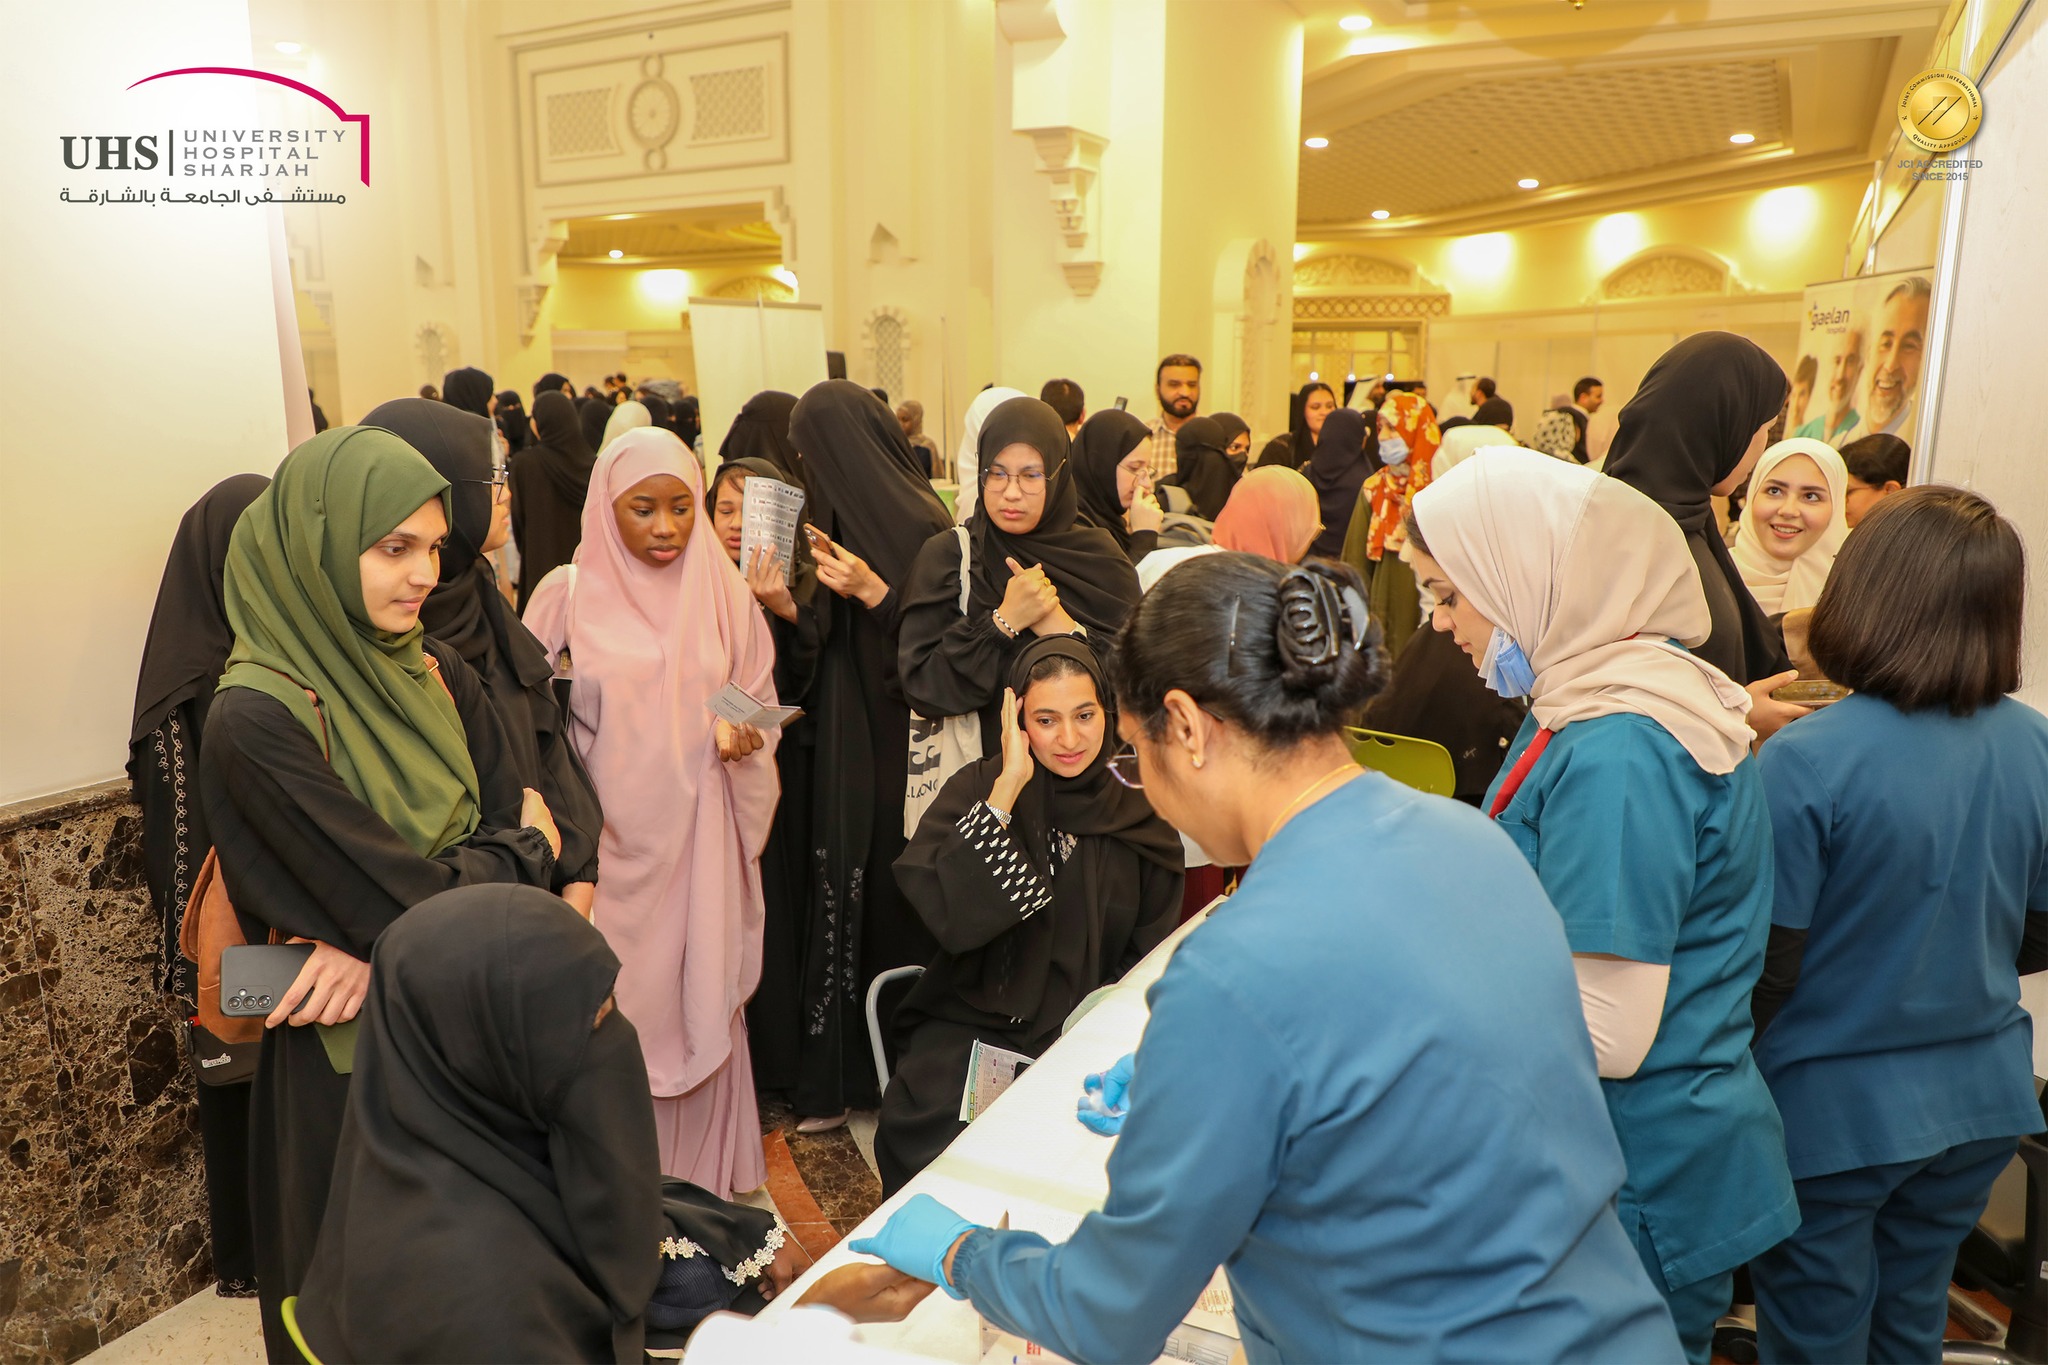 "Health is Happiness Exhibition" at Al Qasimia University